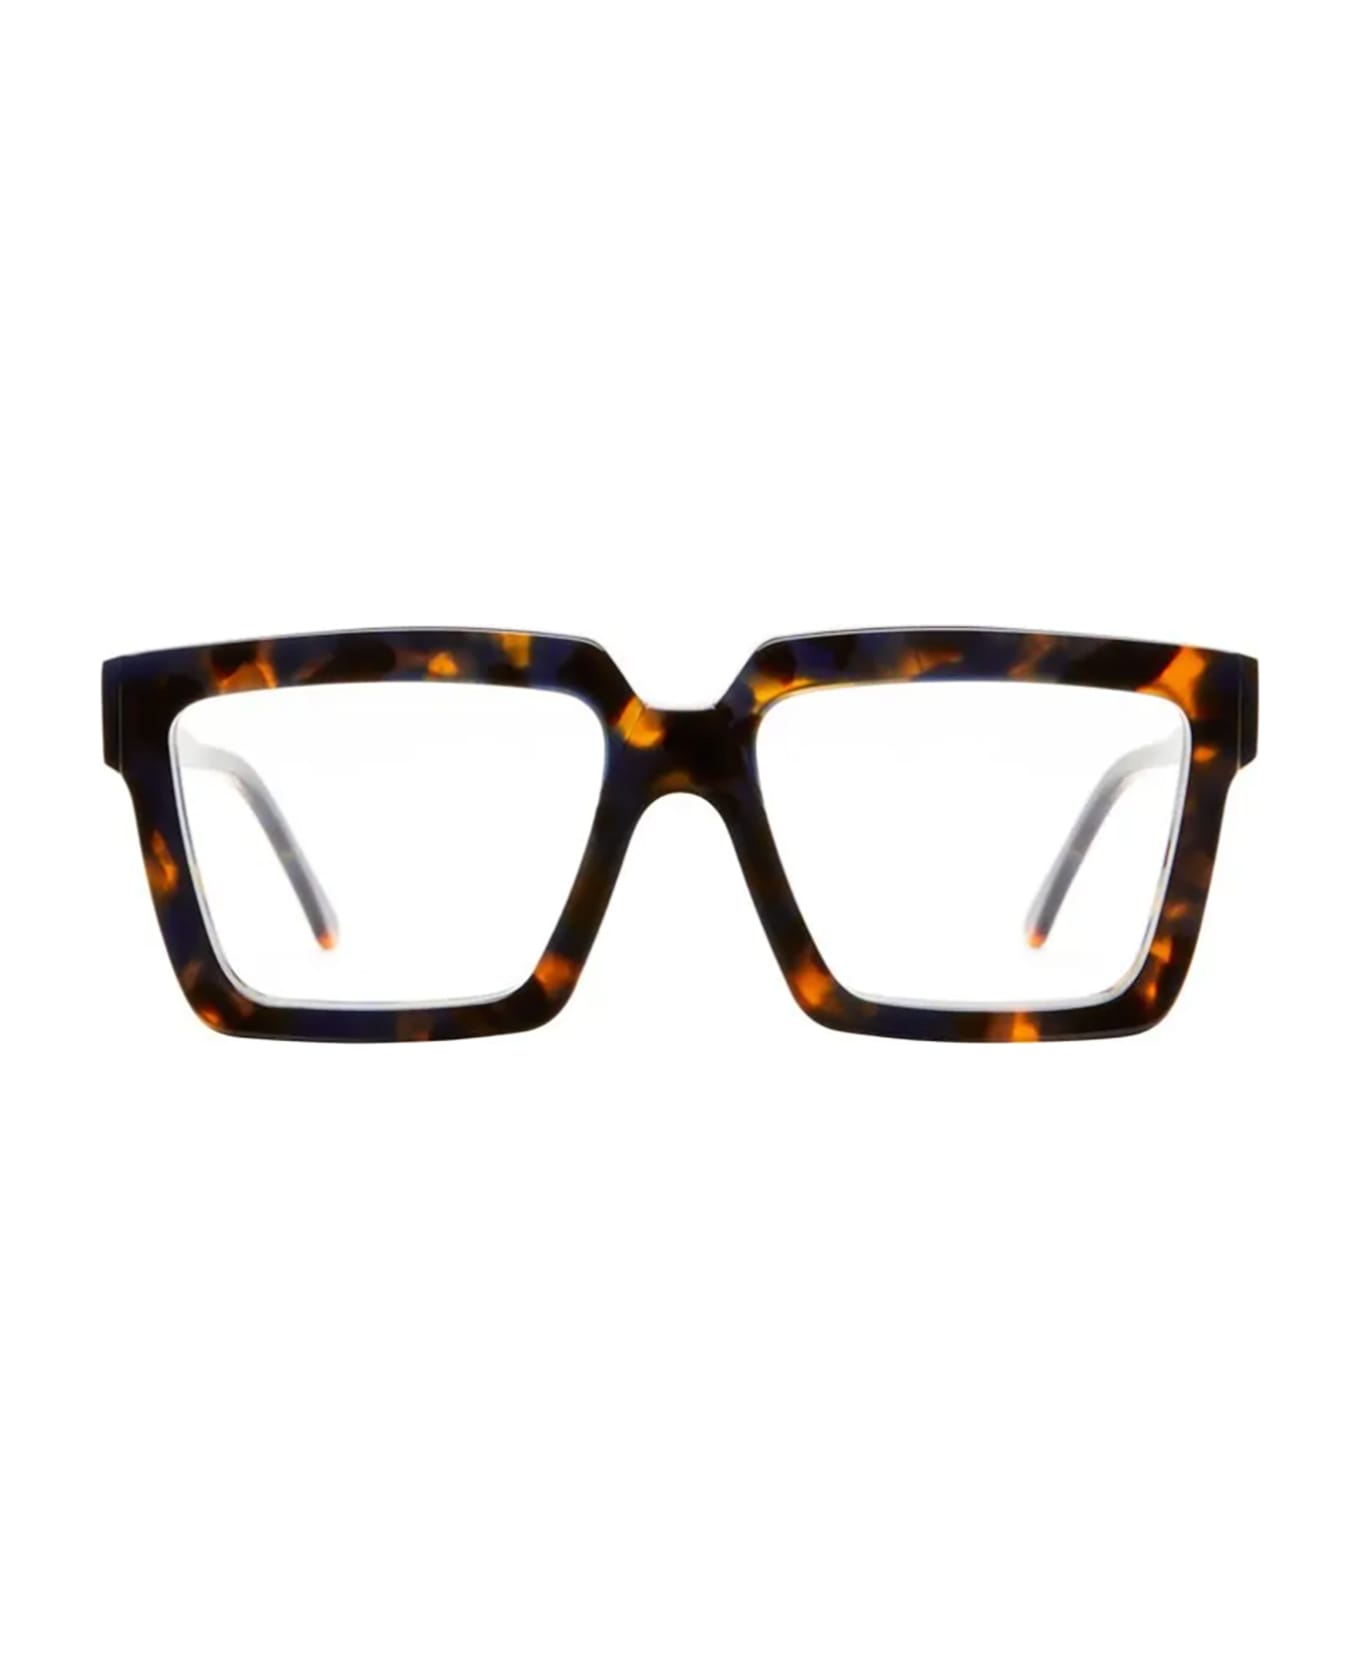 Kuboraum K26 Eyewear - Hb アイウェア